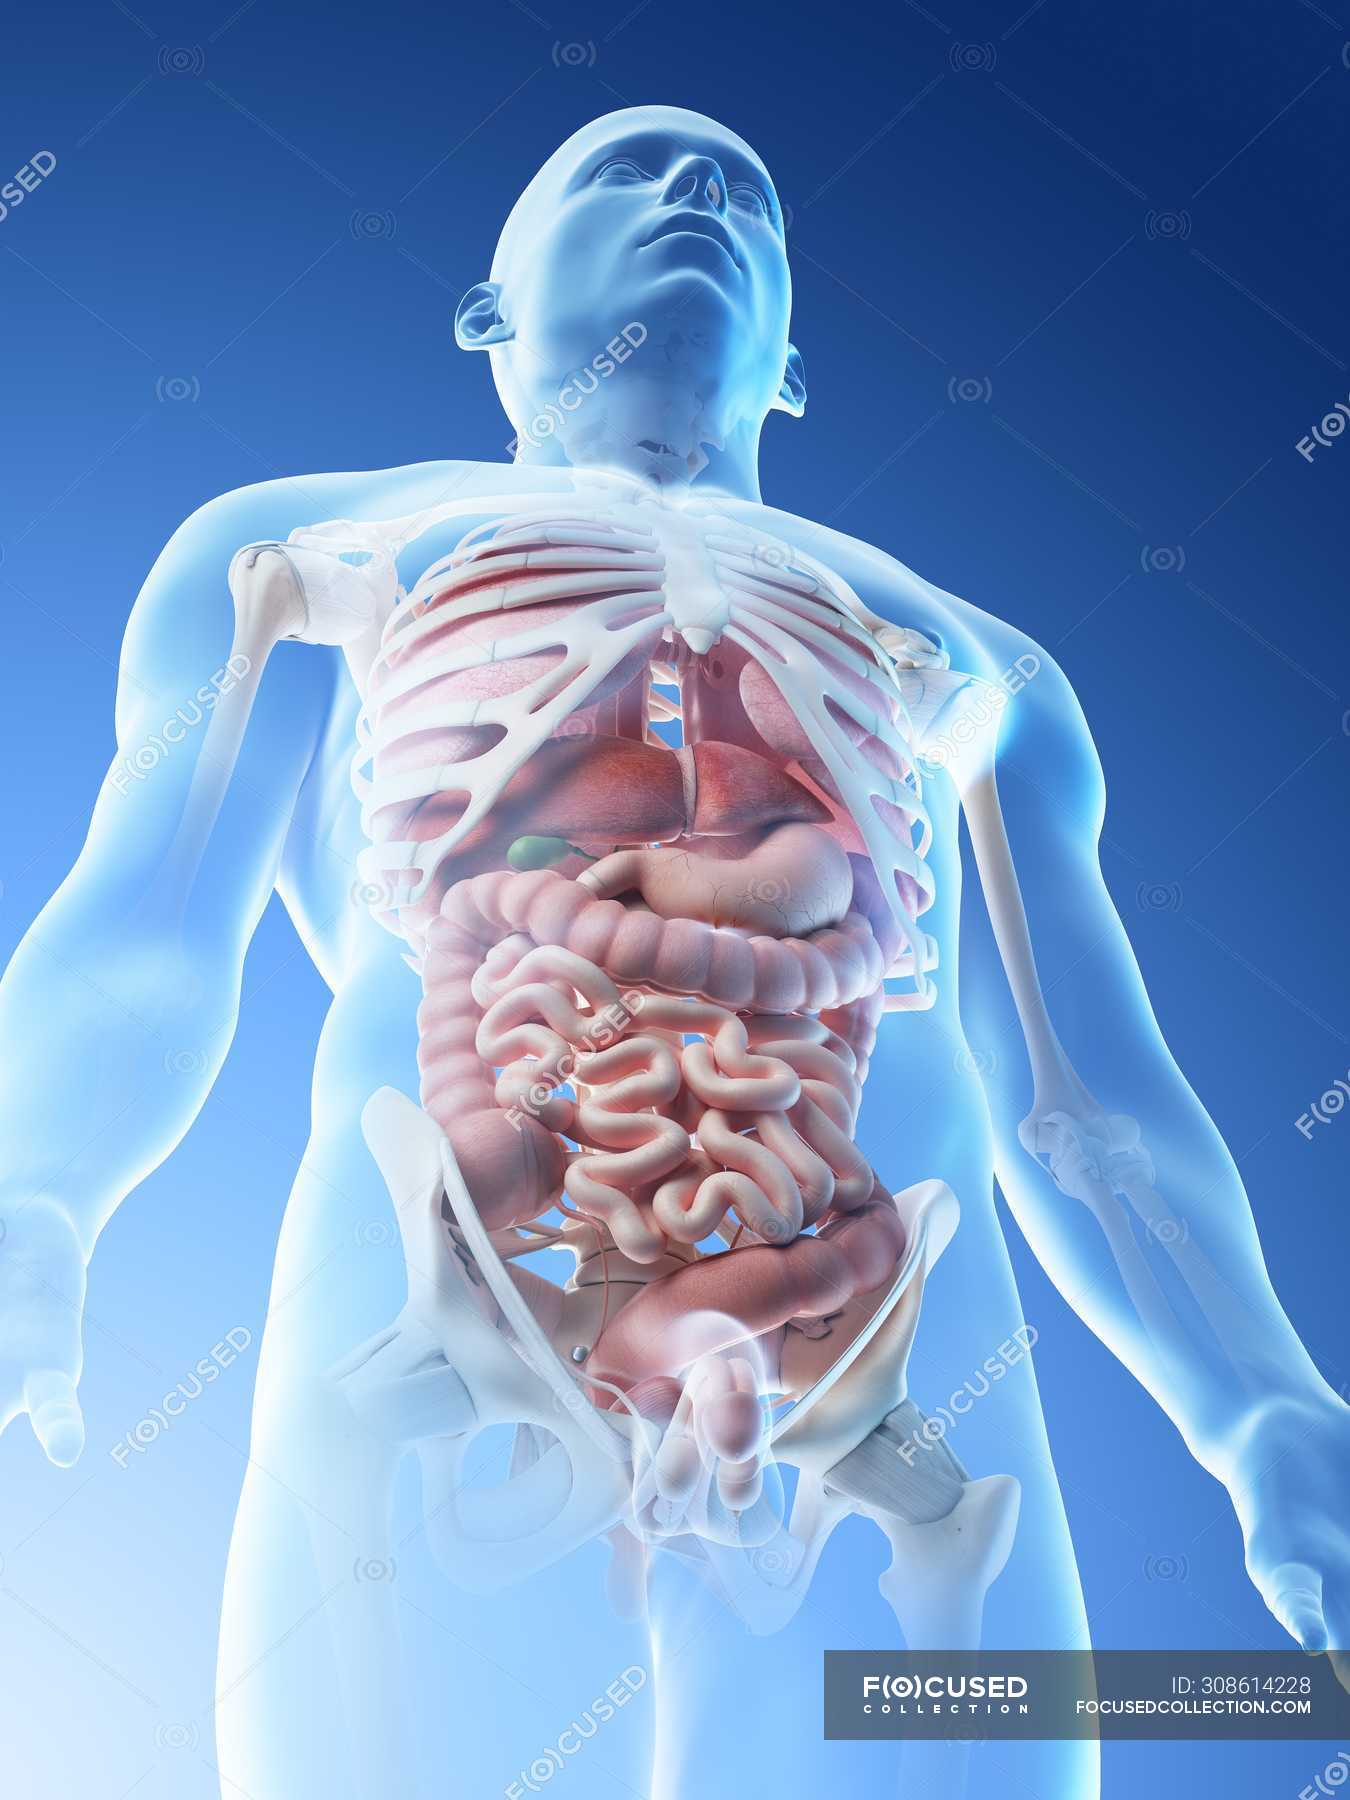 Transparent Body Model Showing Male Anatomy And Internal Organs Digital Illustration Human Anatomy Colon Stock Photo 308614228